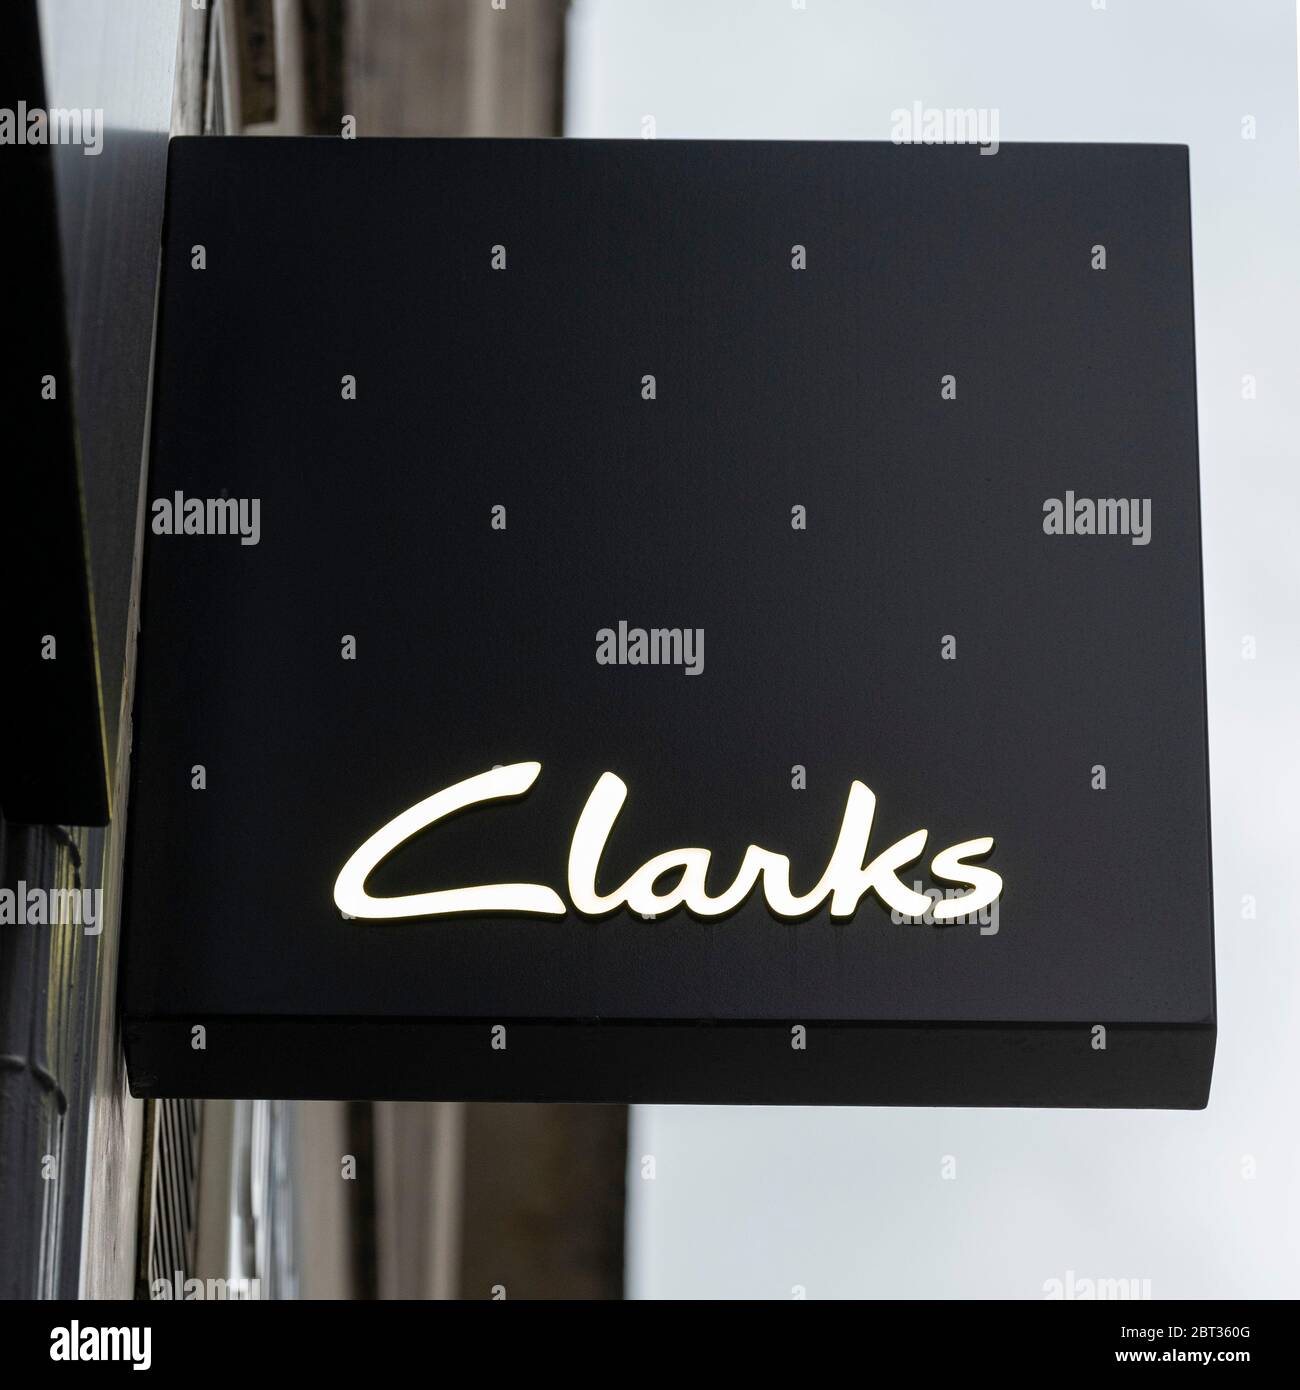 clarks head office